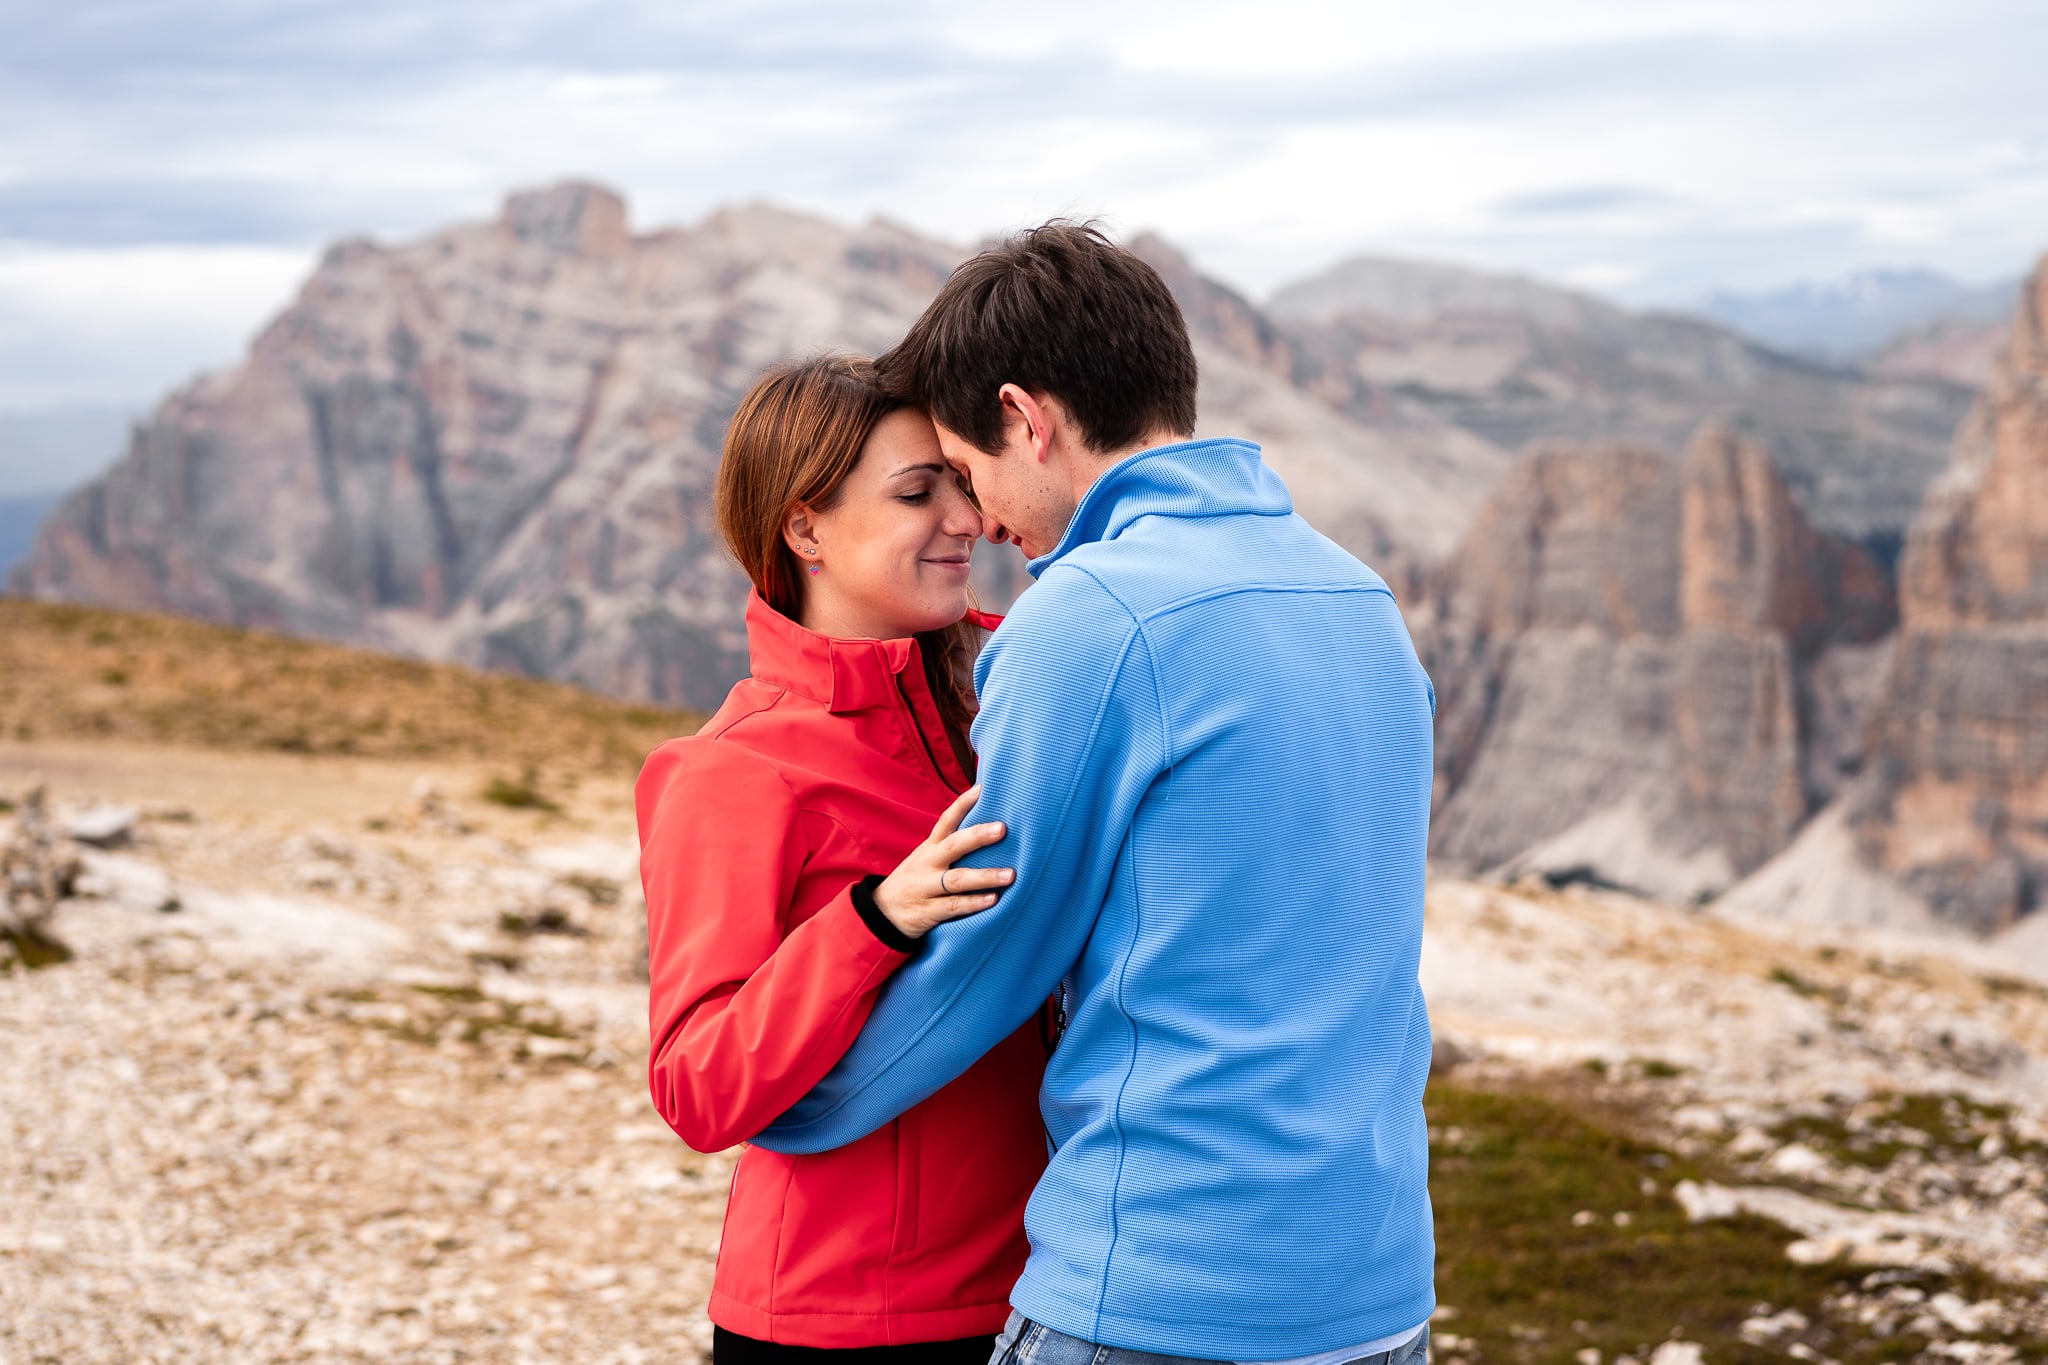 Alessandra Raffaele Prematrimoniale Dolomiti Alta Badia Rifugio Lagazuoi coppia abbracciata sulla montagna